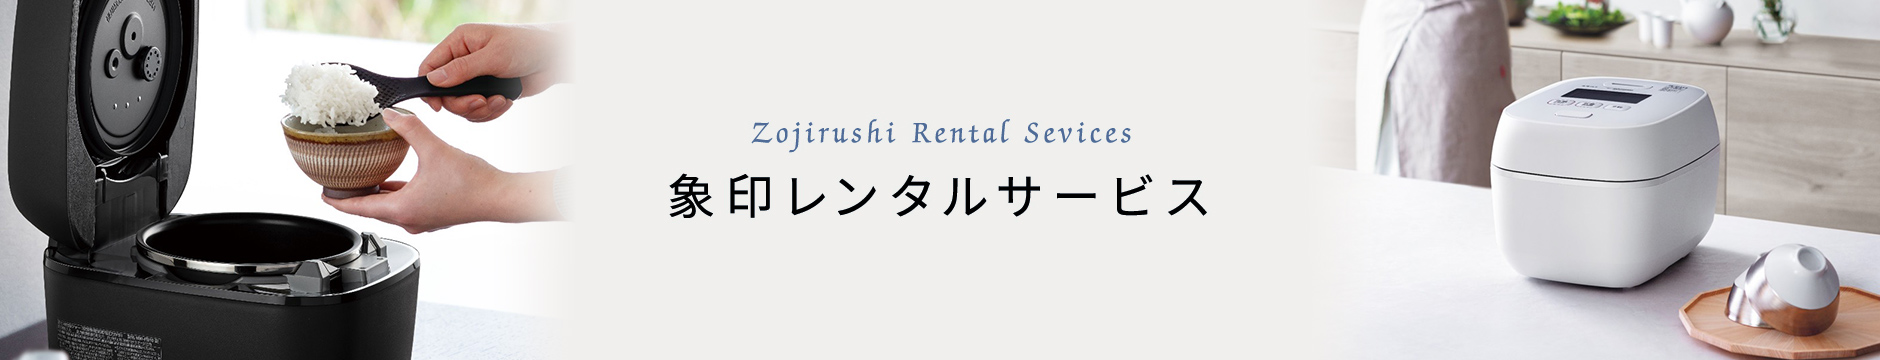 Zojirushi Rental Sevices 象印レンタルサービス